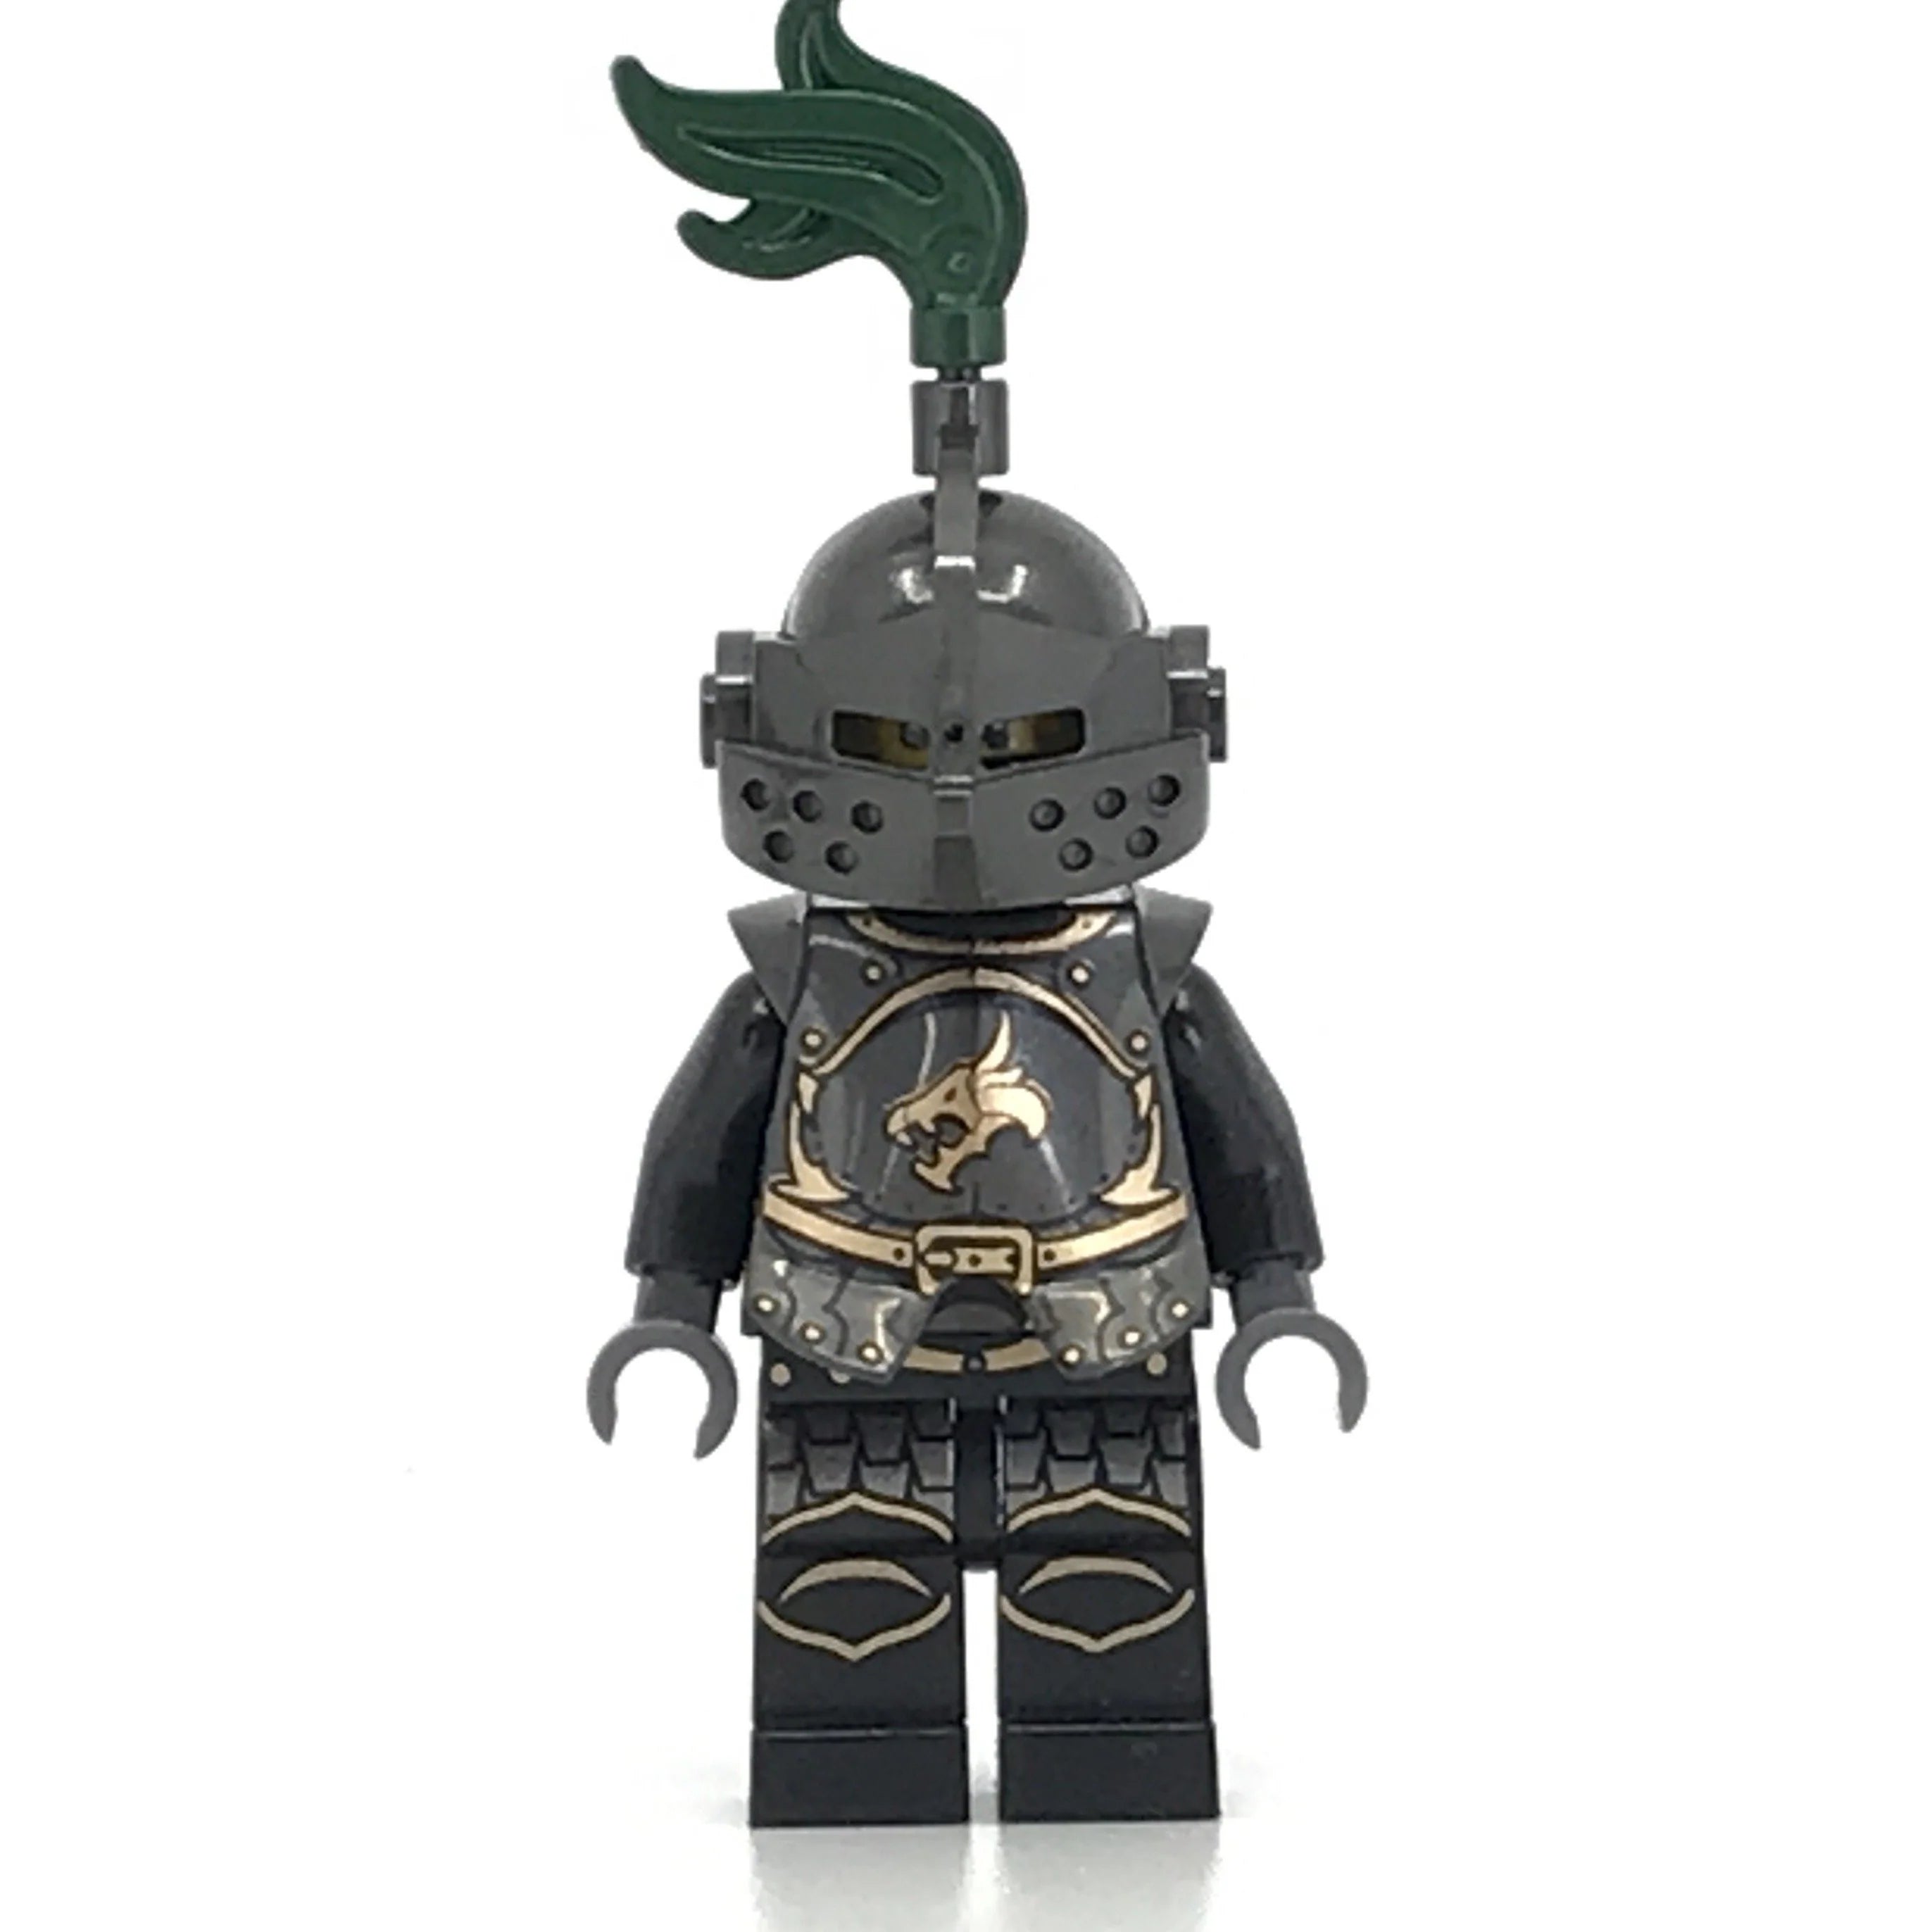 Kingdoms - Dragon Knight Armor with Chain, Helmet with Visor, Beard